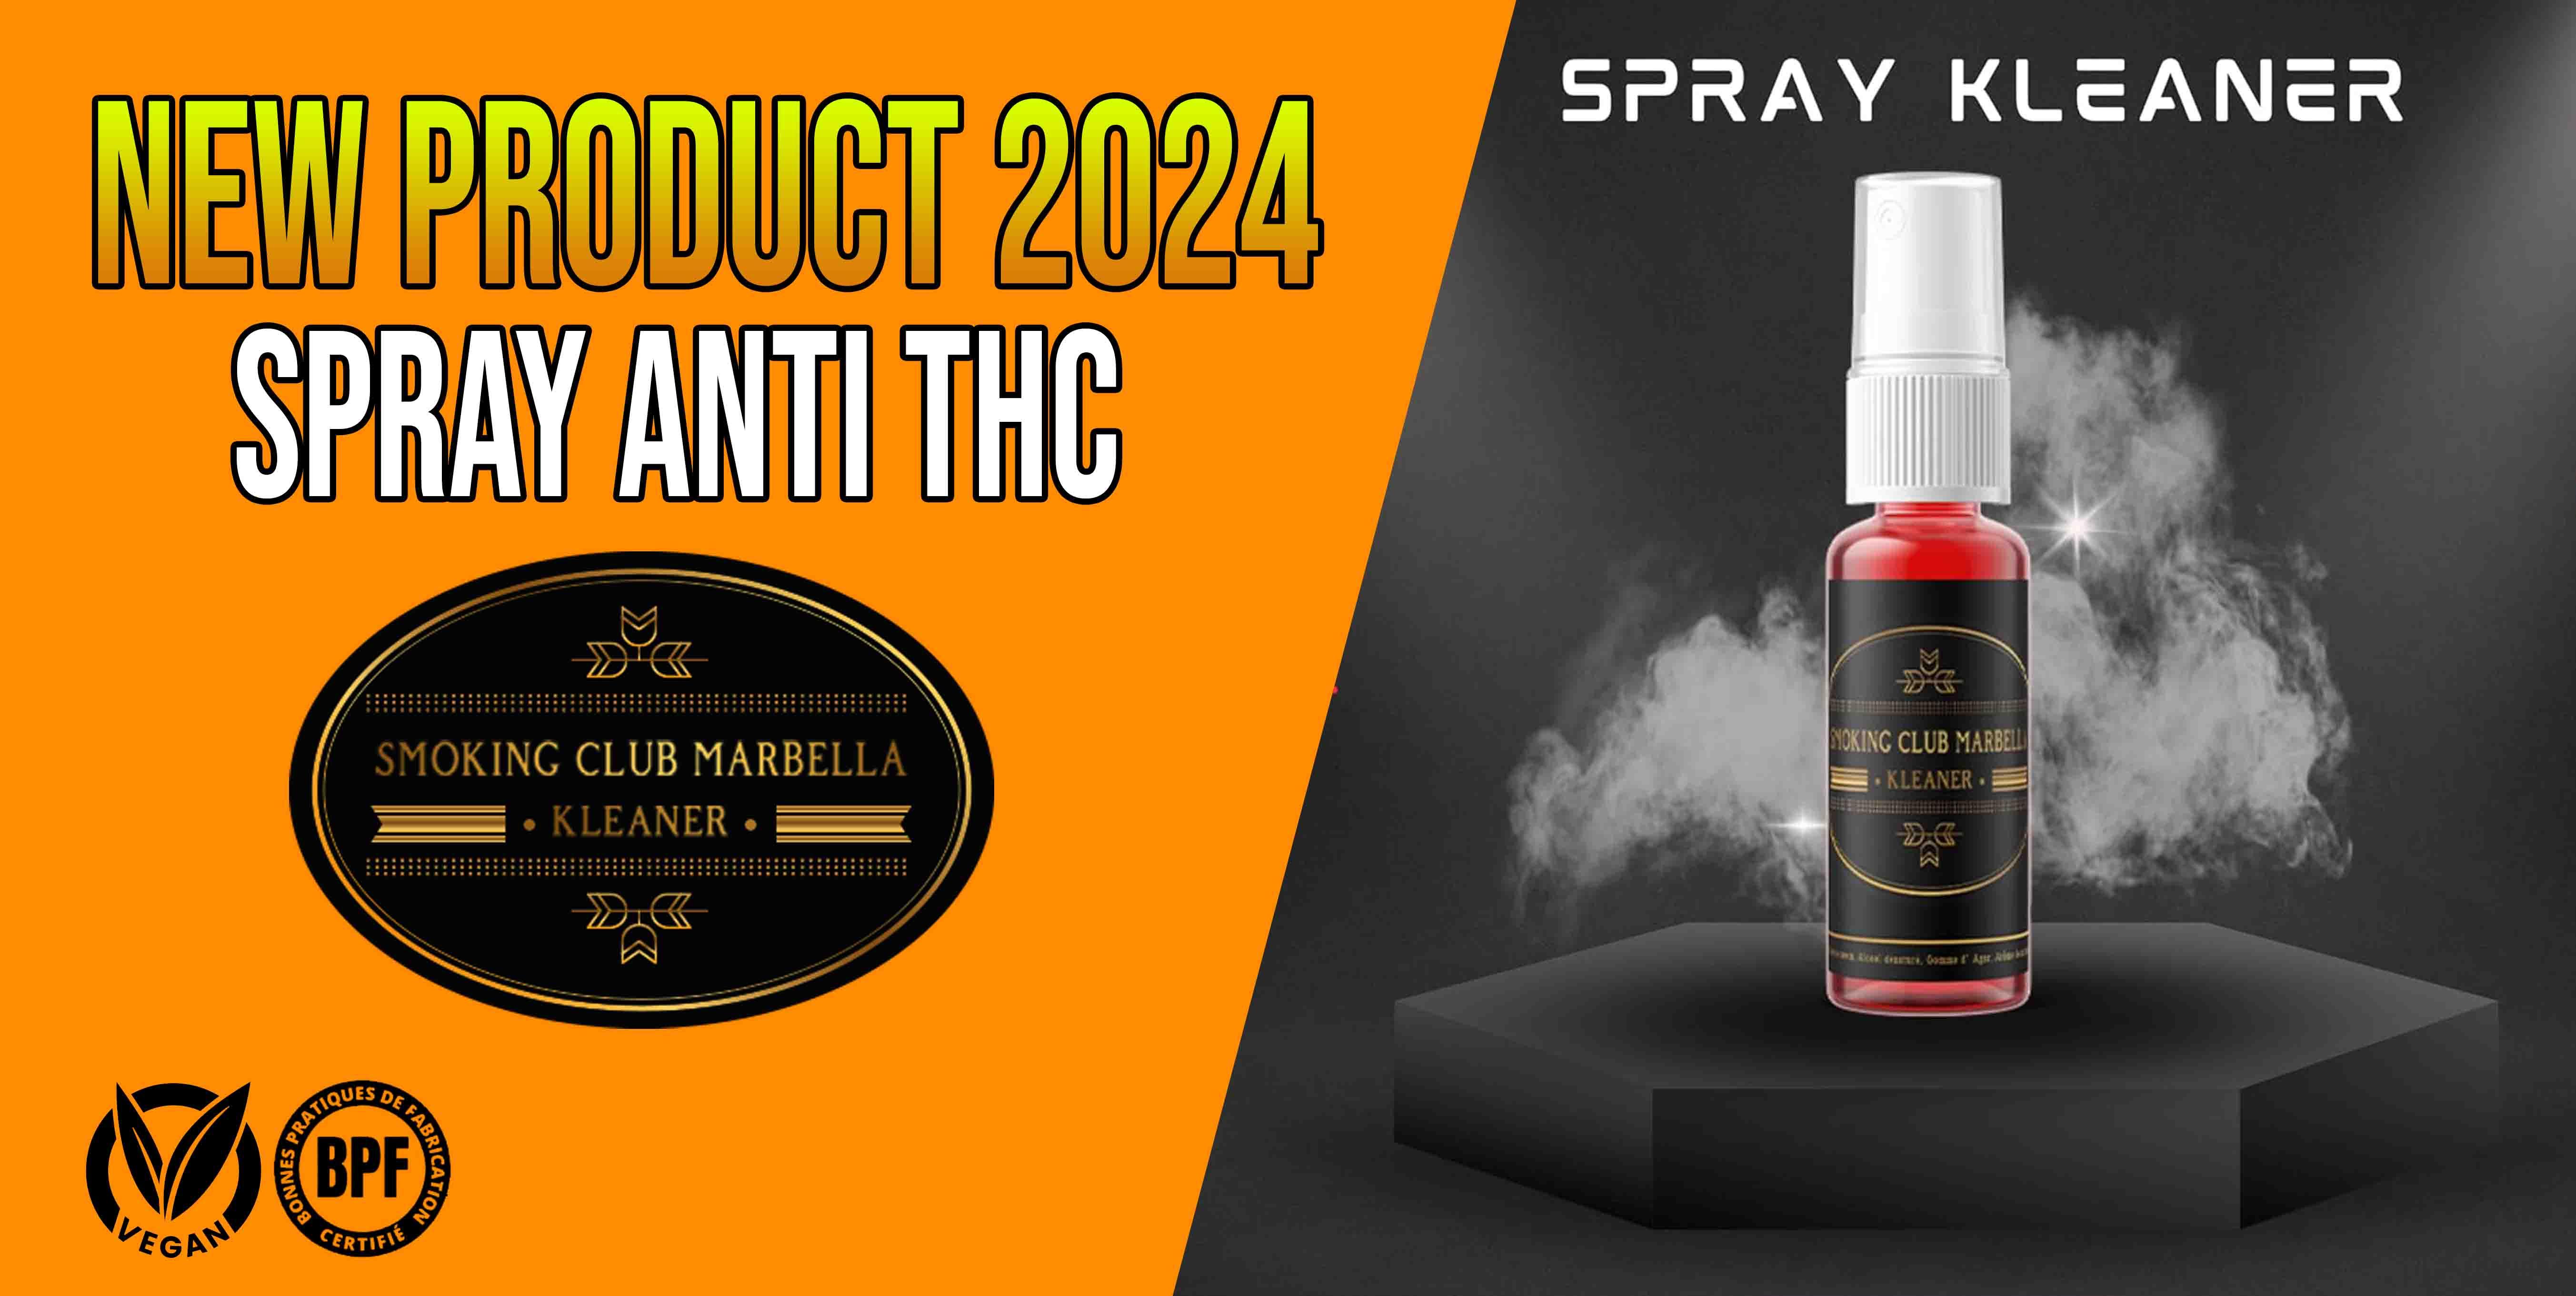 Spray Anti thc products